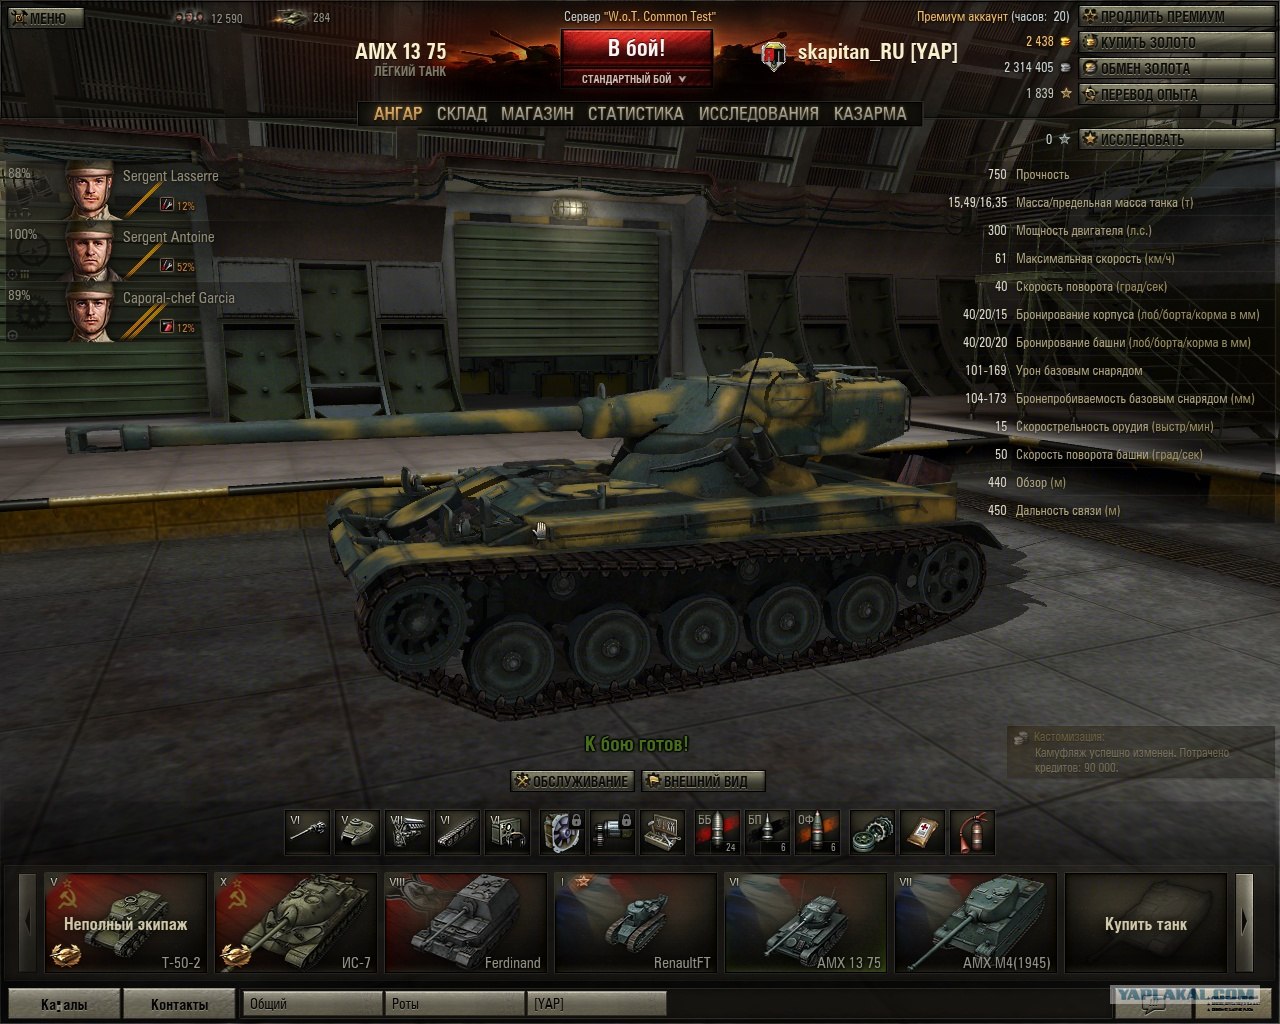 AMX скорострельность. Sherman sa50. 75mm sa50. Т-50 скорость поворота башни. Танк 300 тюнинг купить